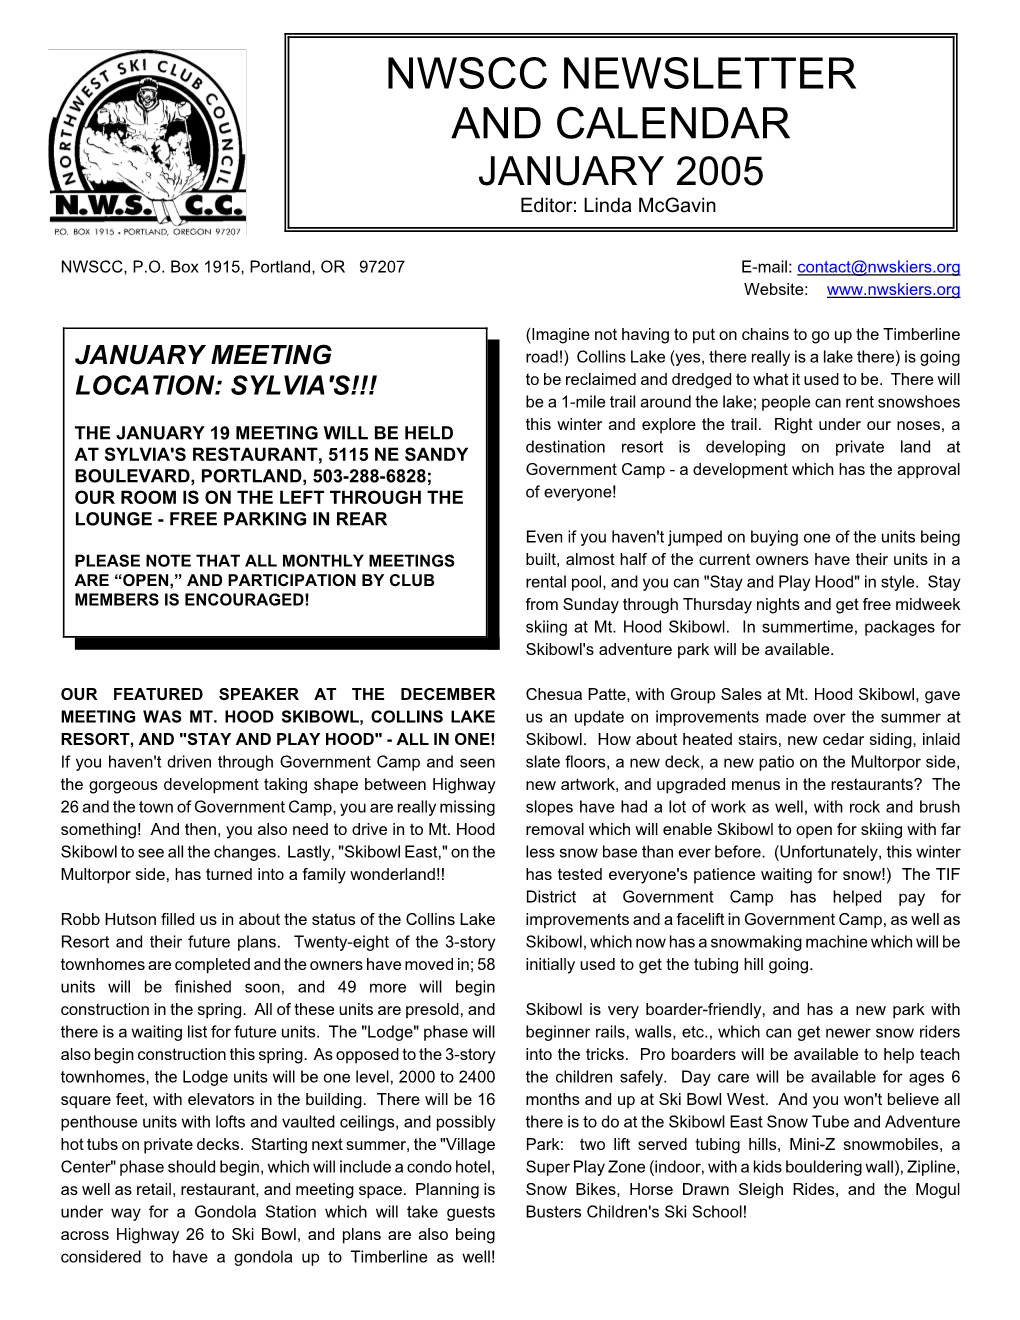 NWSCC NEWSLETTER and CALENDAR JANUARY 2005 Editor: Linda Mcgavin